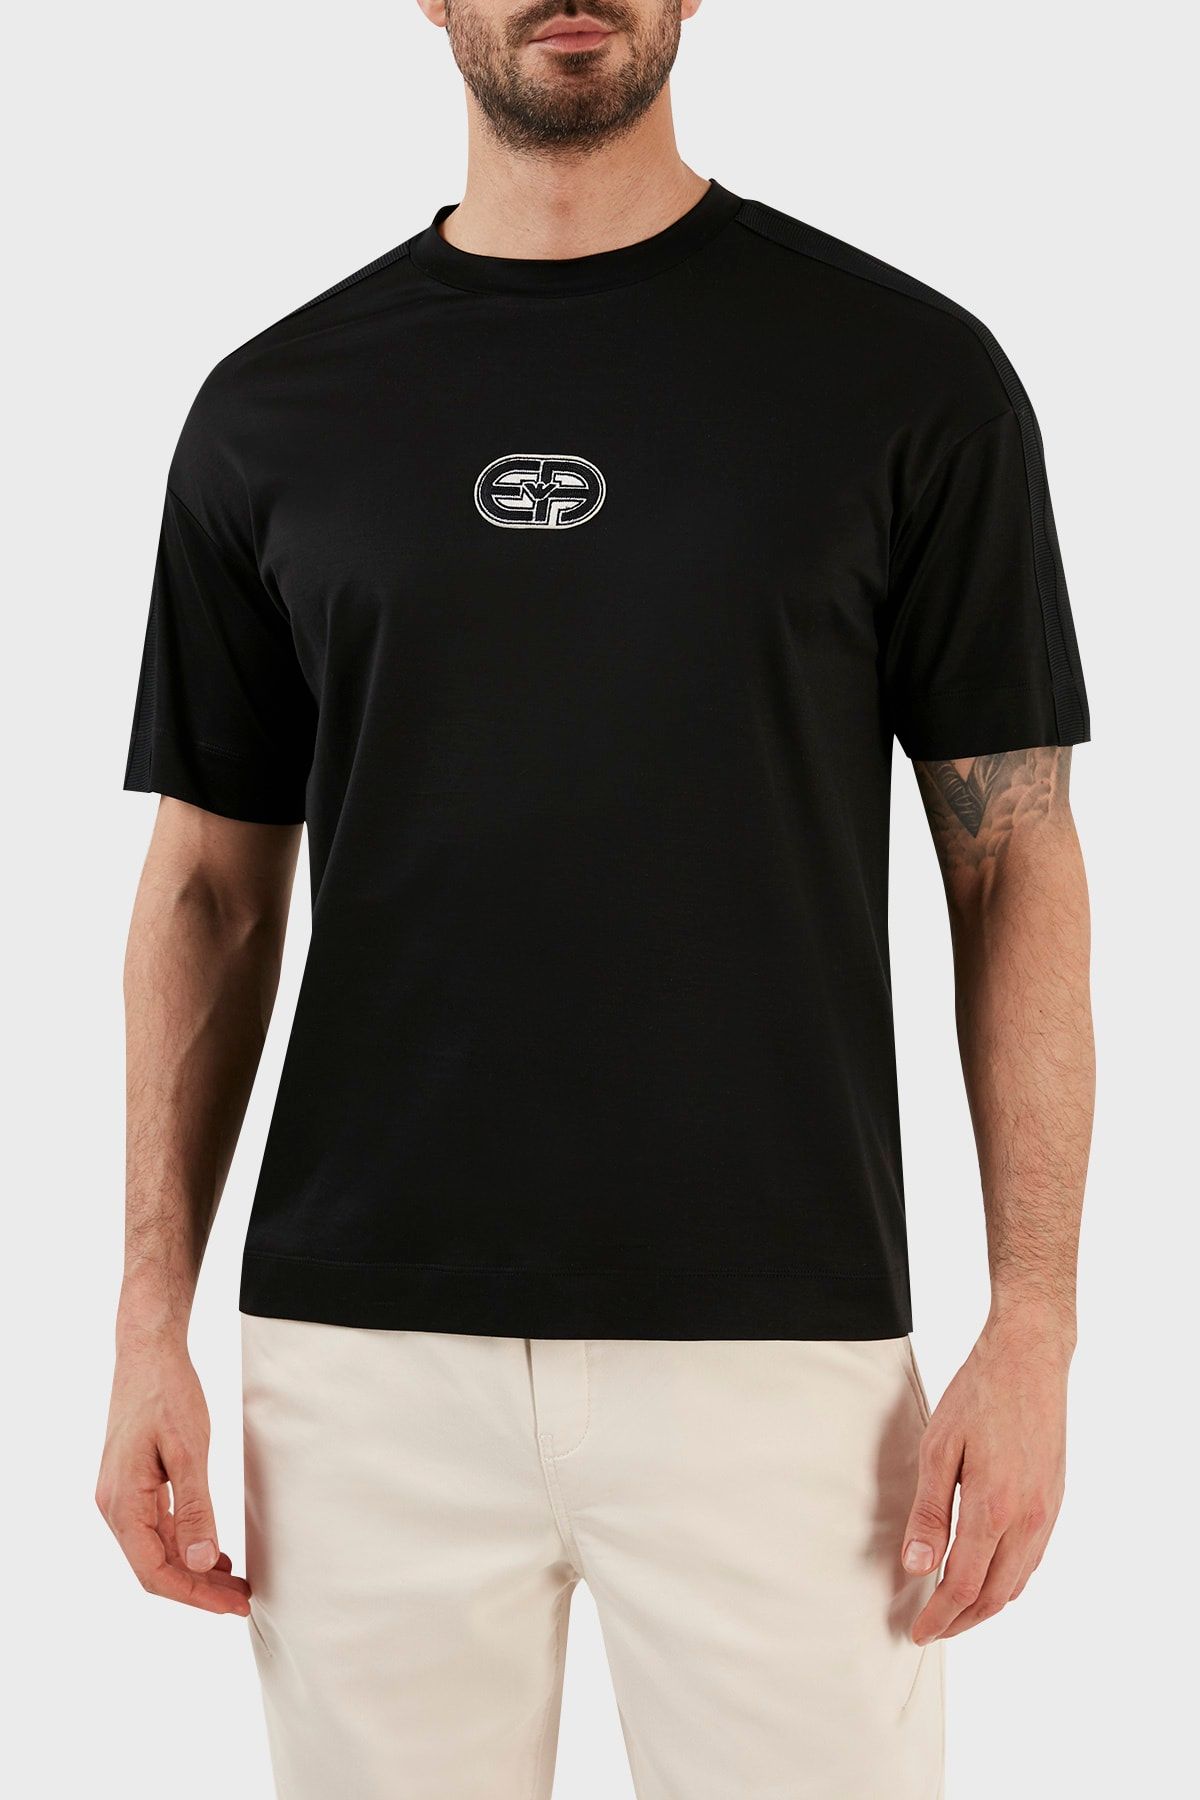 Emporio Armani Pamuk Karışımlı Bisiklet Yaka Comfort Fit T Shirt Erkek T Shirt 3r1tt6 1juvz 0999